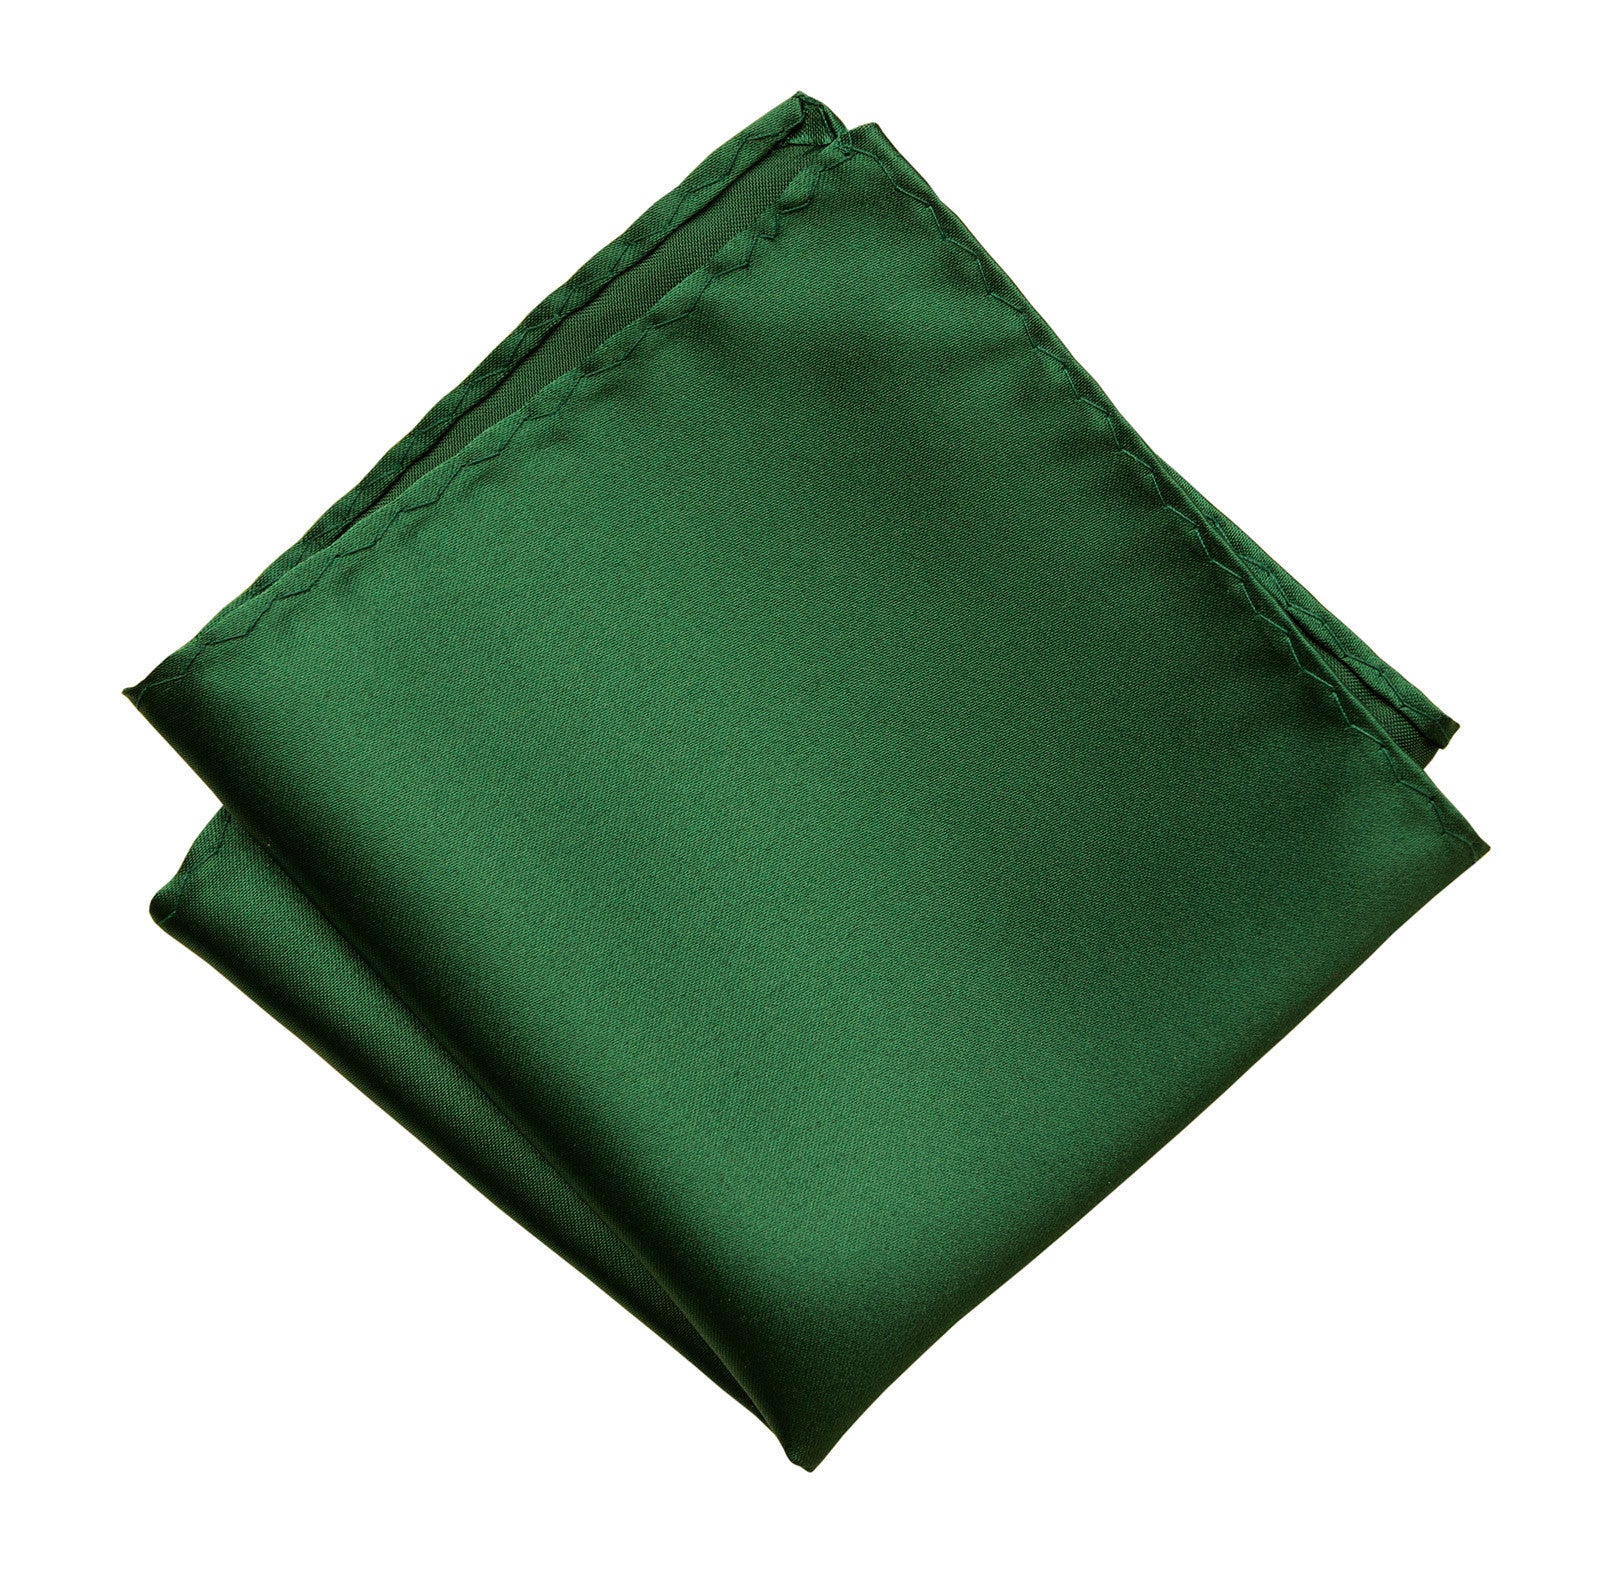 Emerald Green Pocket Square Dark Green Solid Color Satin Finish No Print